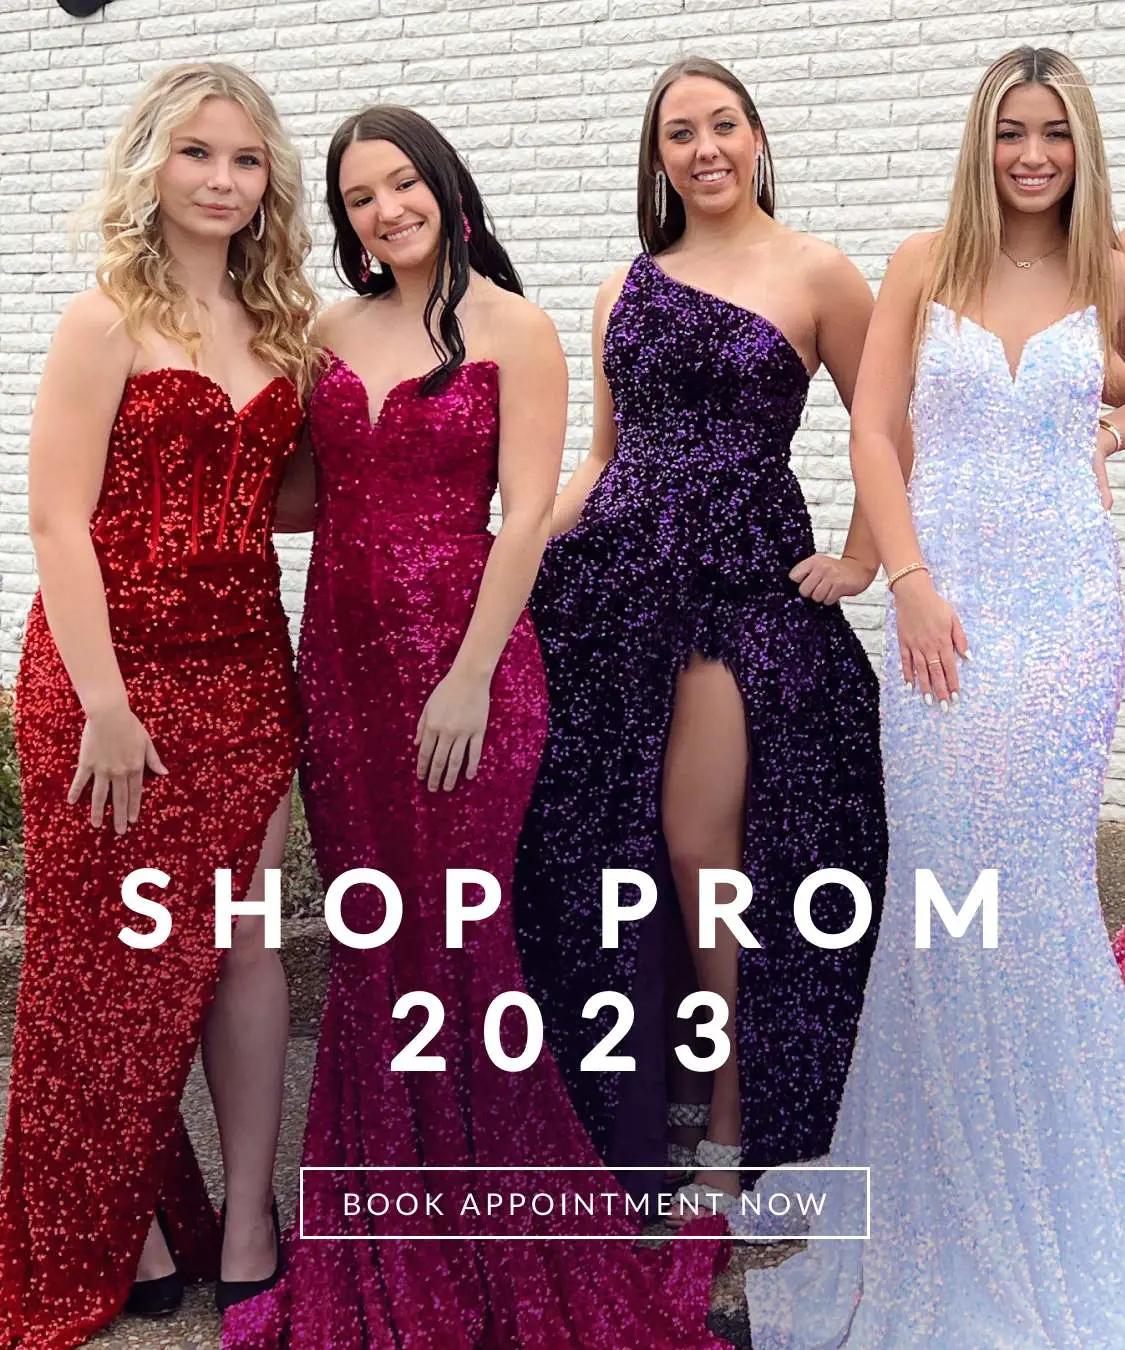 Girls Wearing Prom Dresses Mobile